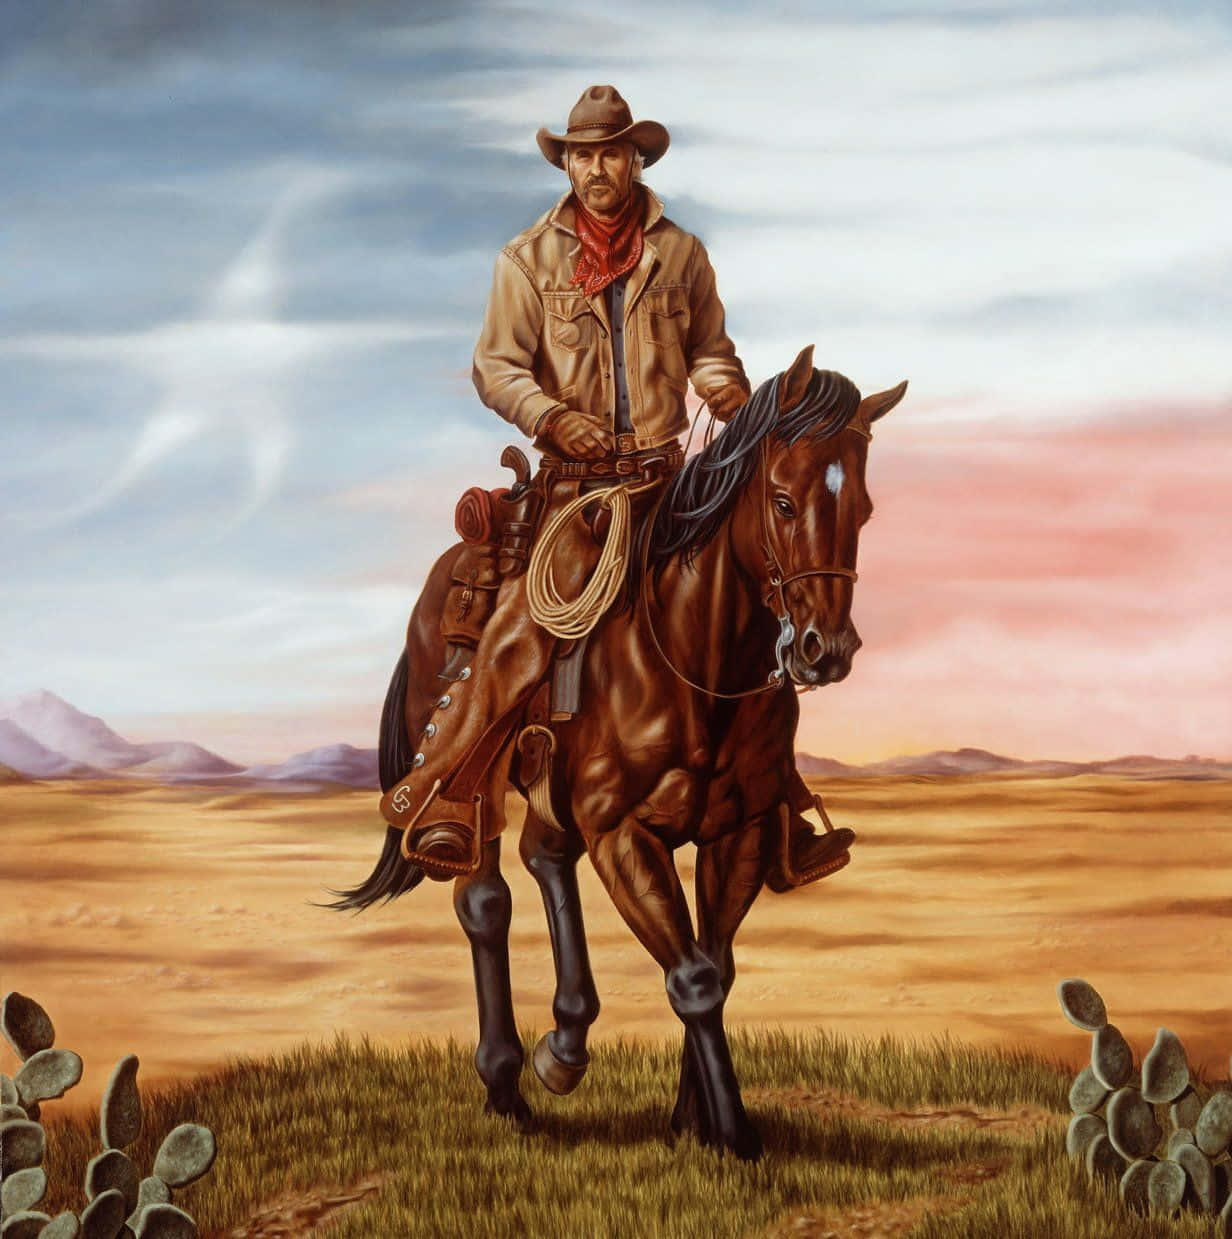 The Wild West Spirit – Cowboys on Horseback